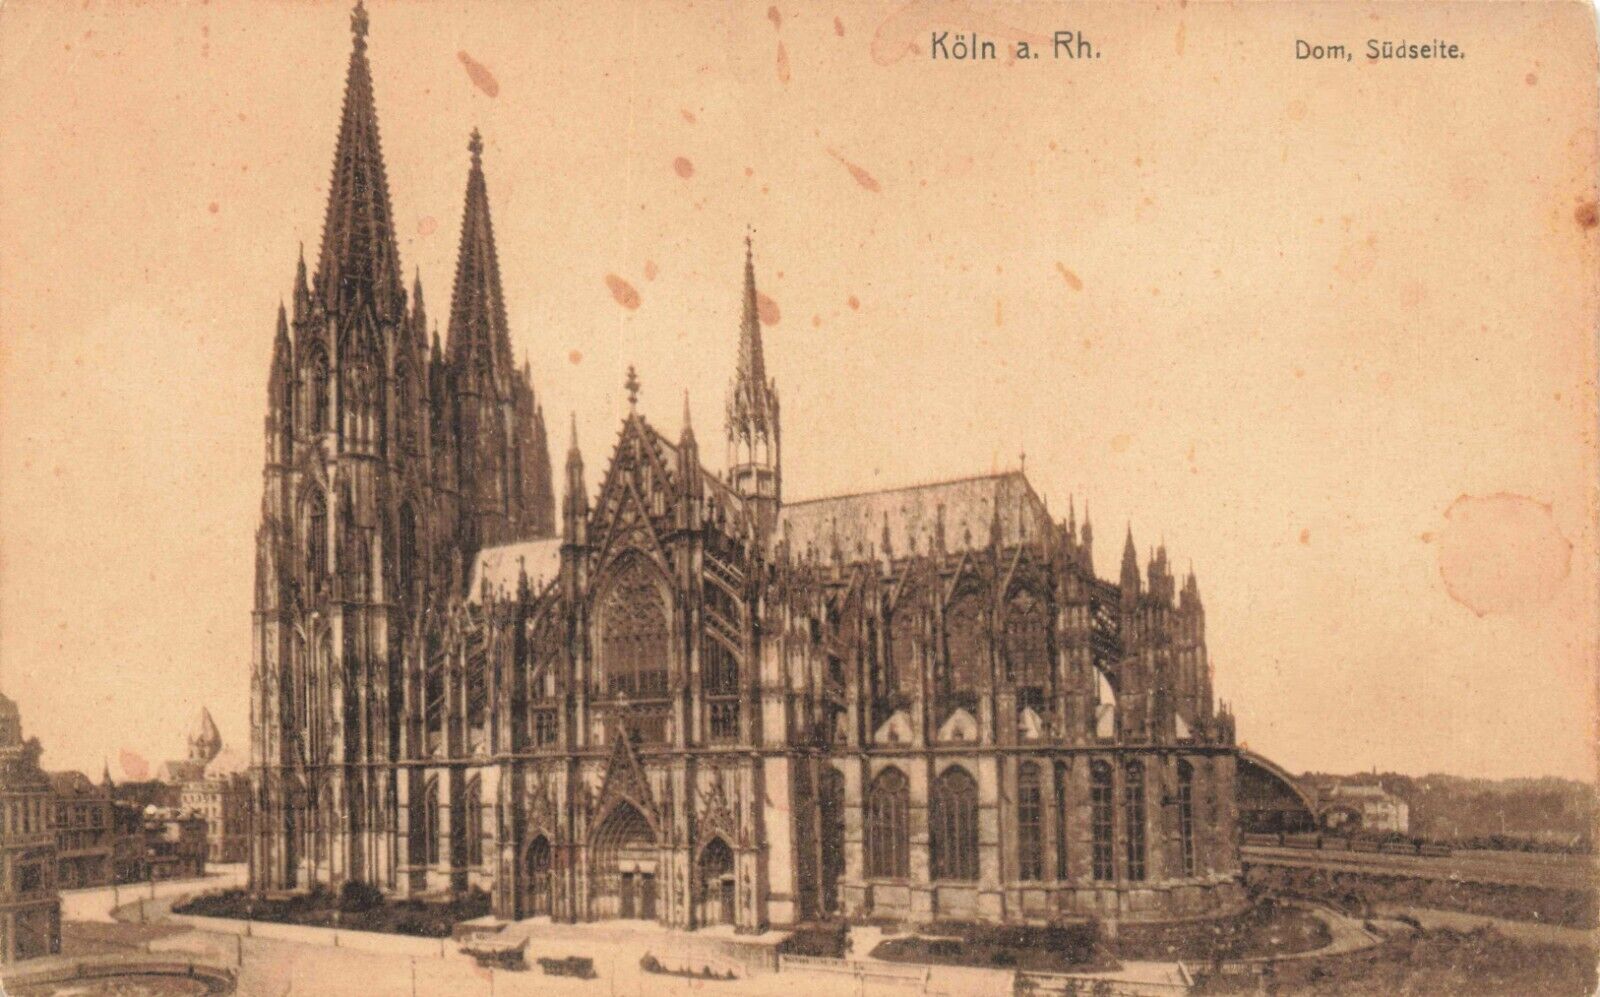 Postcard Germany Cologne Köln Cathedral South Side Dom Sudseite Catholic Church